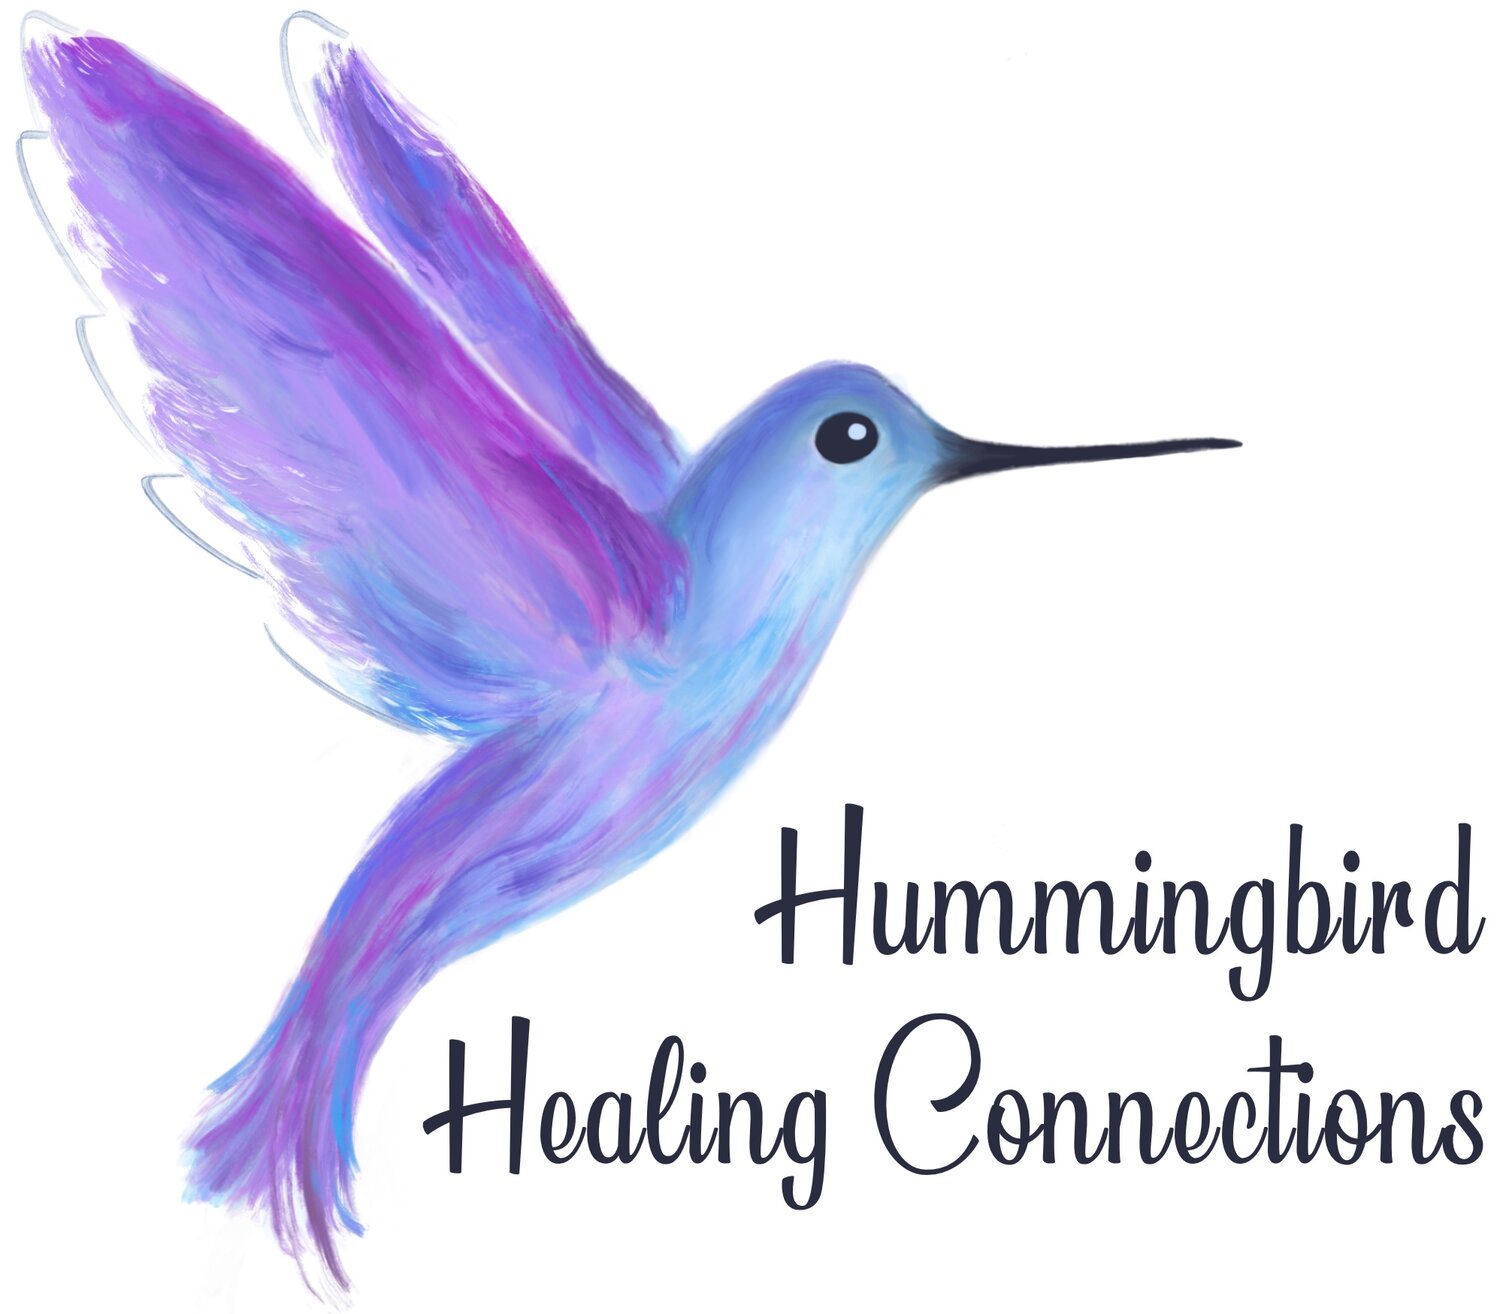 Hummingbird Healing Connections